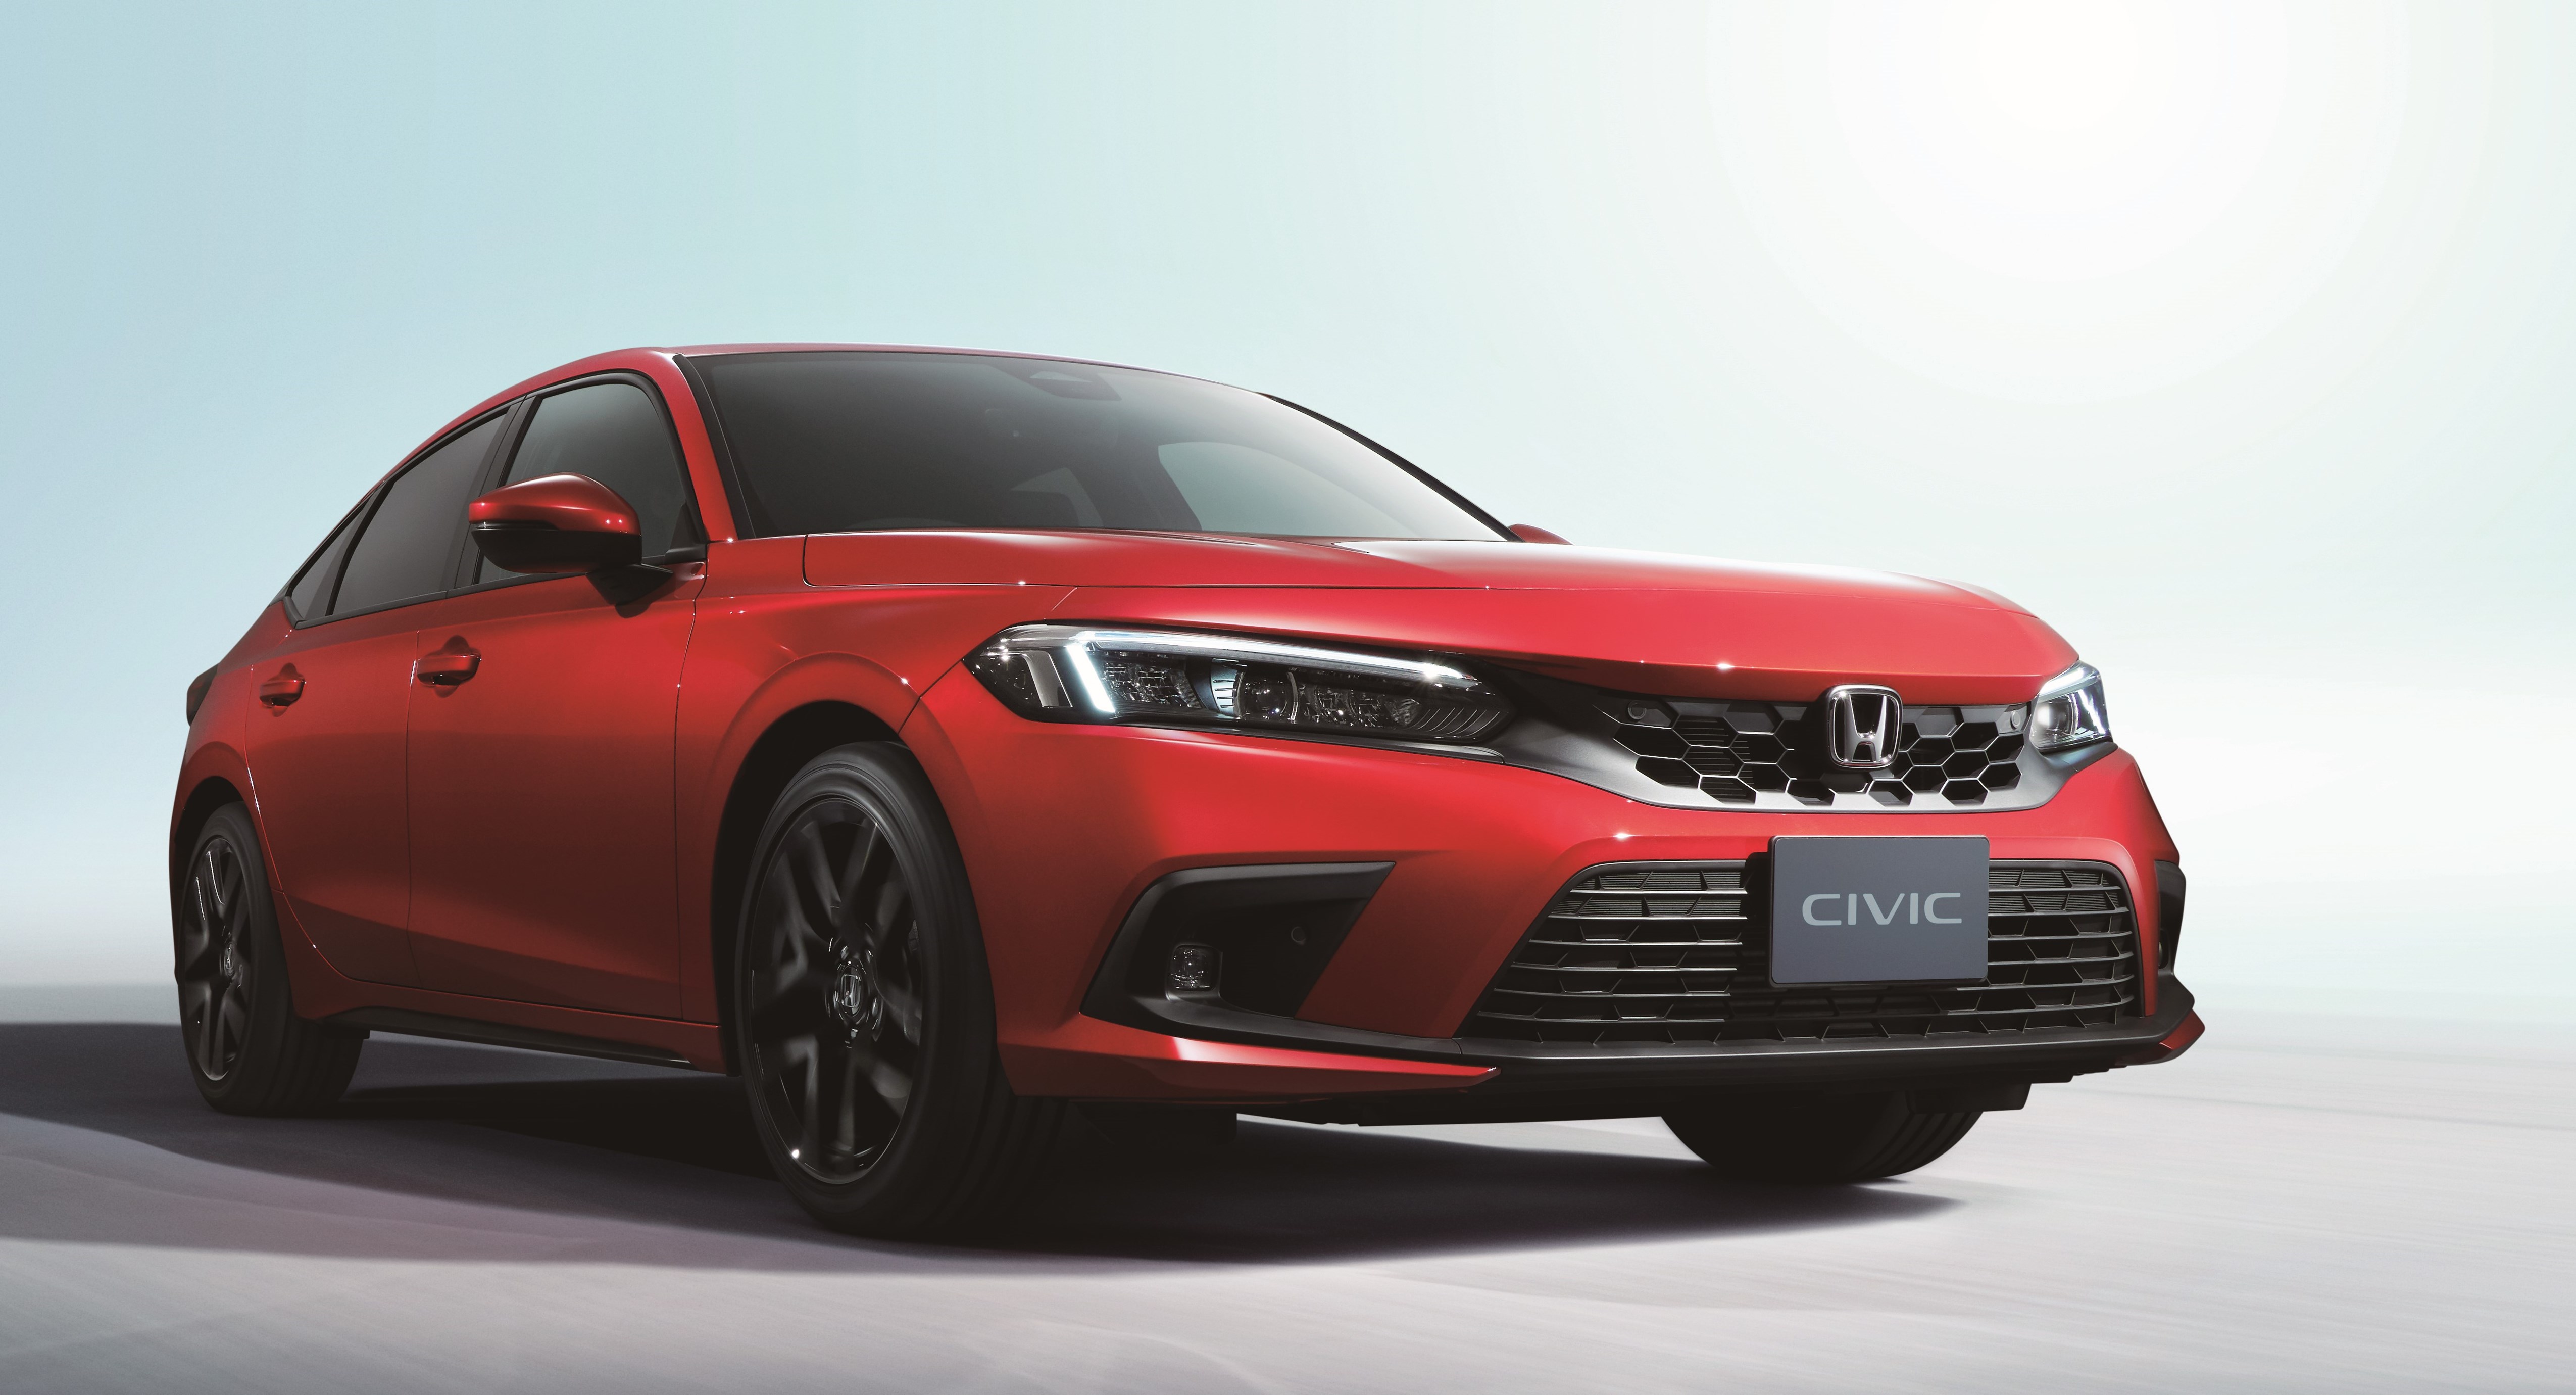 Pictures of new hybrid Honda Civic revealed